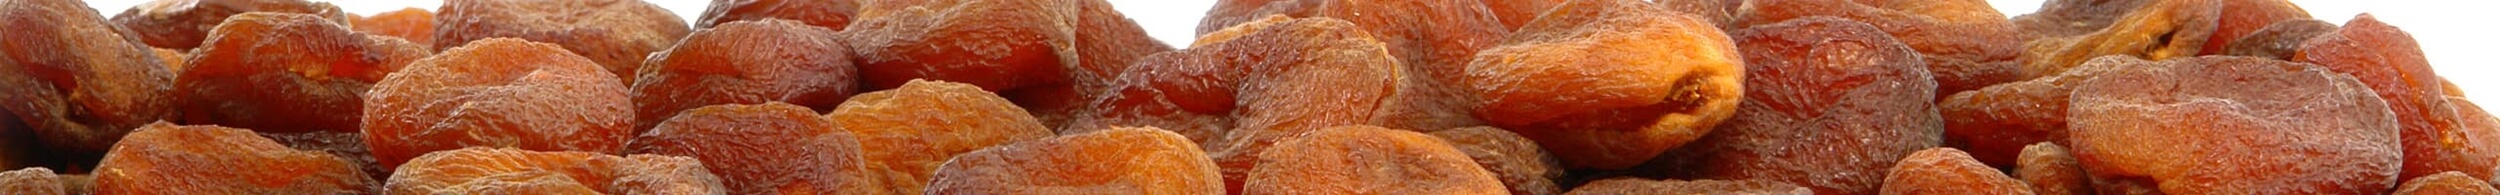 Naturel Dried Apricots